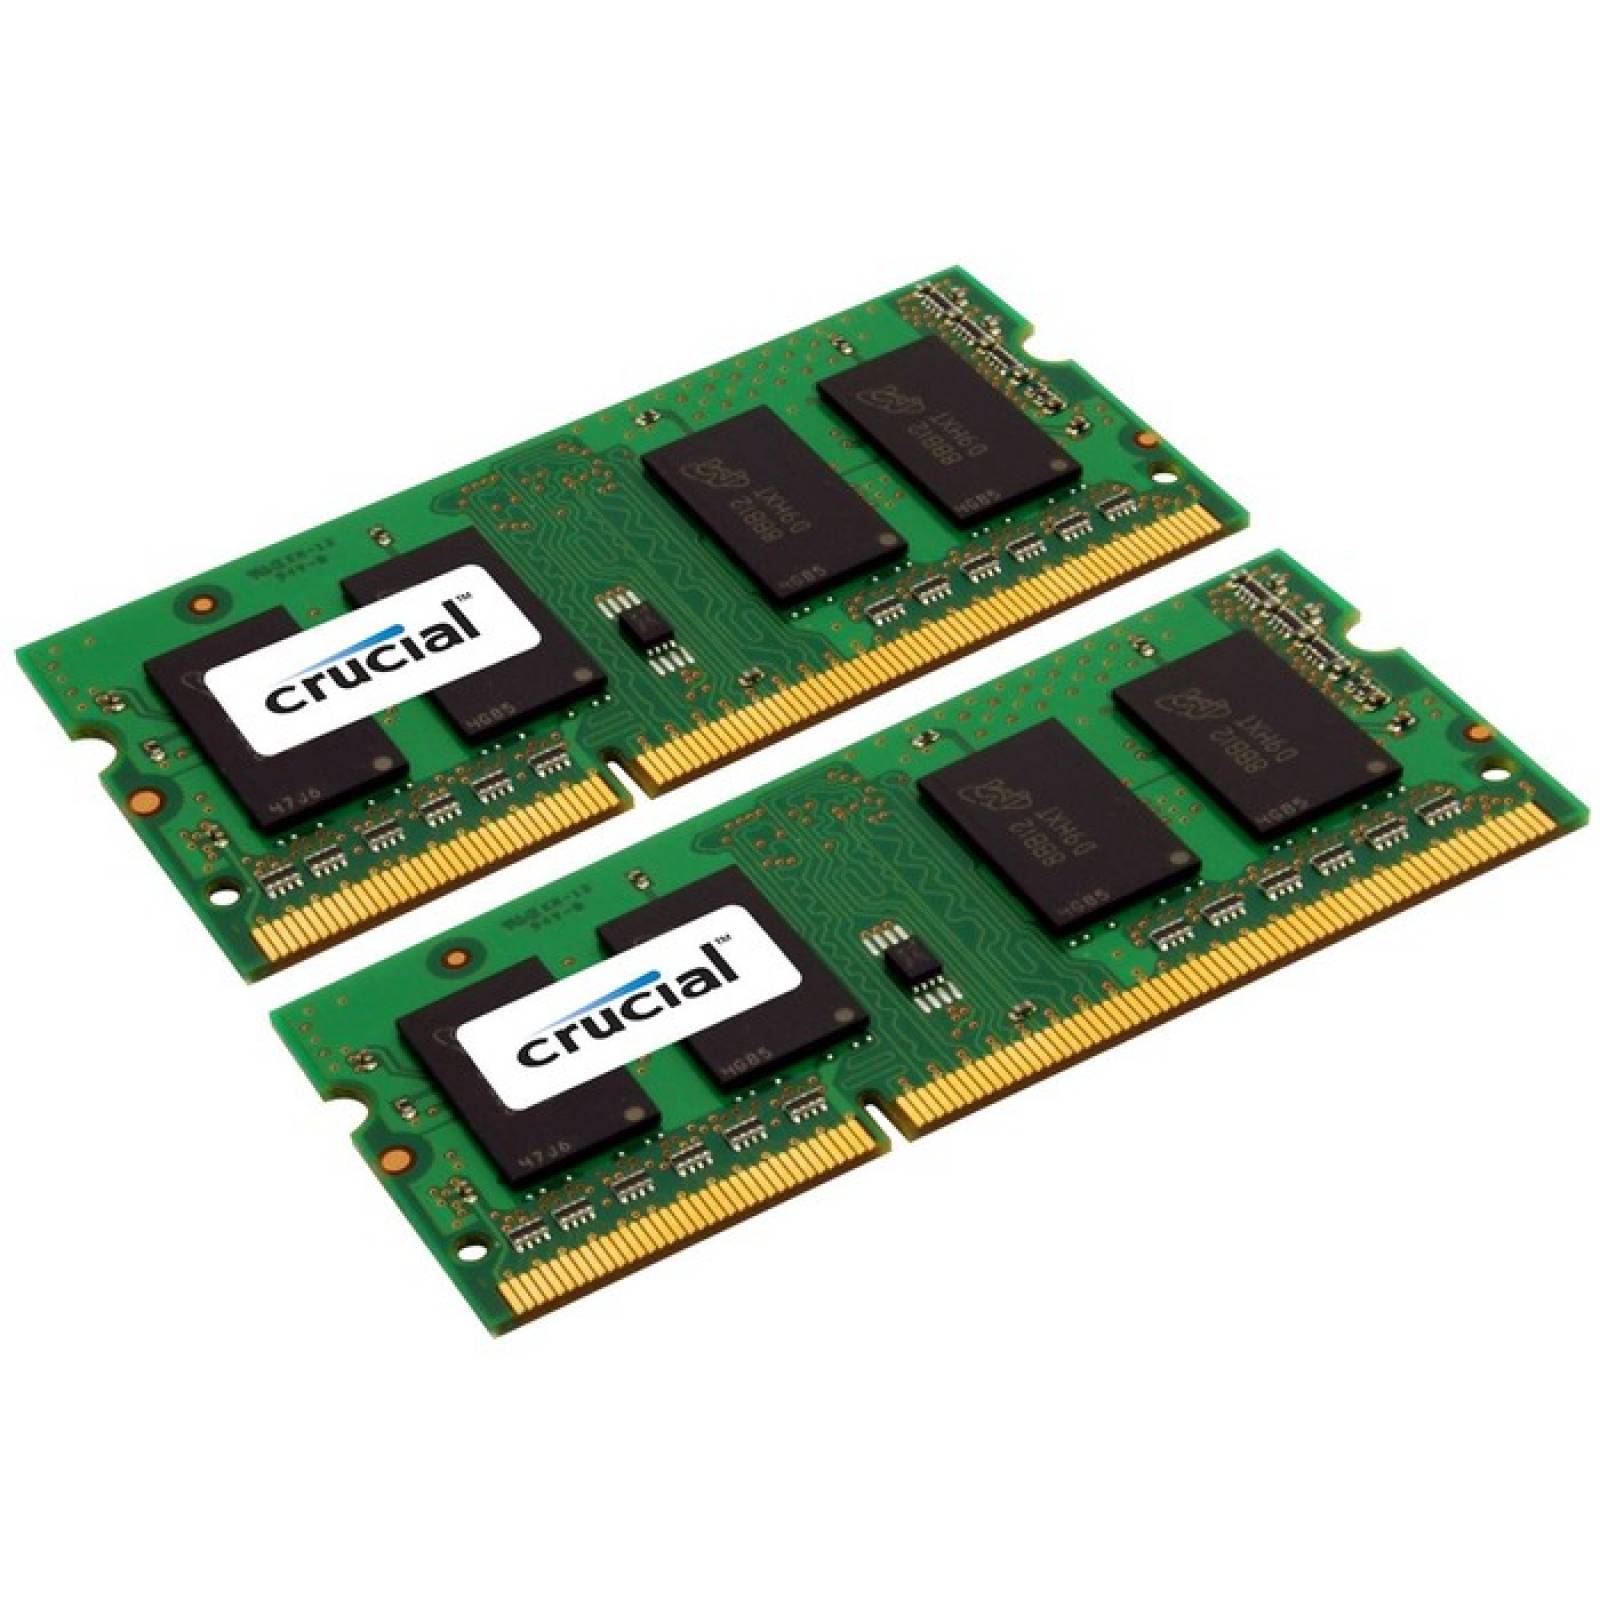 Mdulo de memoria SDRAM DDR3 de 8 GB (2 x 4 GB) crucial